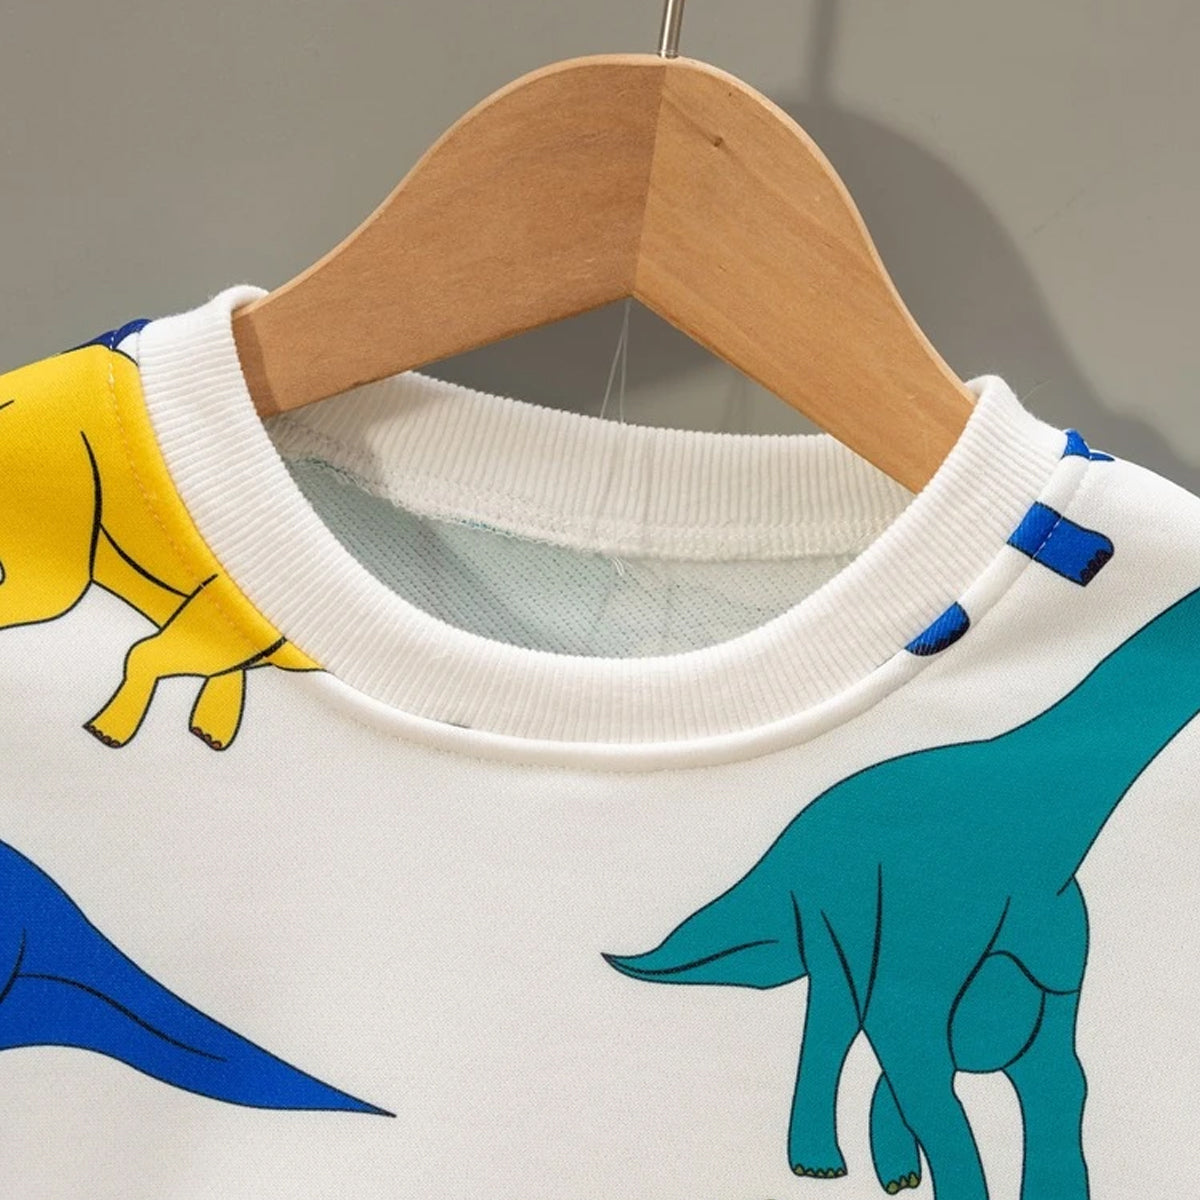 Venutaloza Toddler Boys Dinosaur Print Graphic Pullover & Cami Pent T-shirt & Pants.